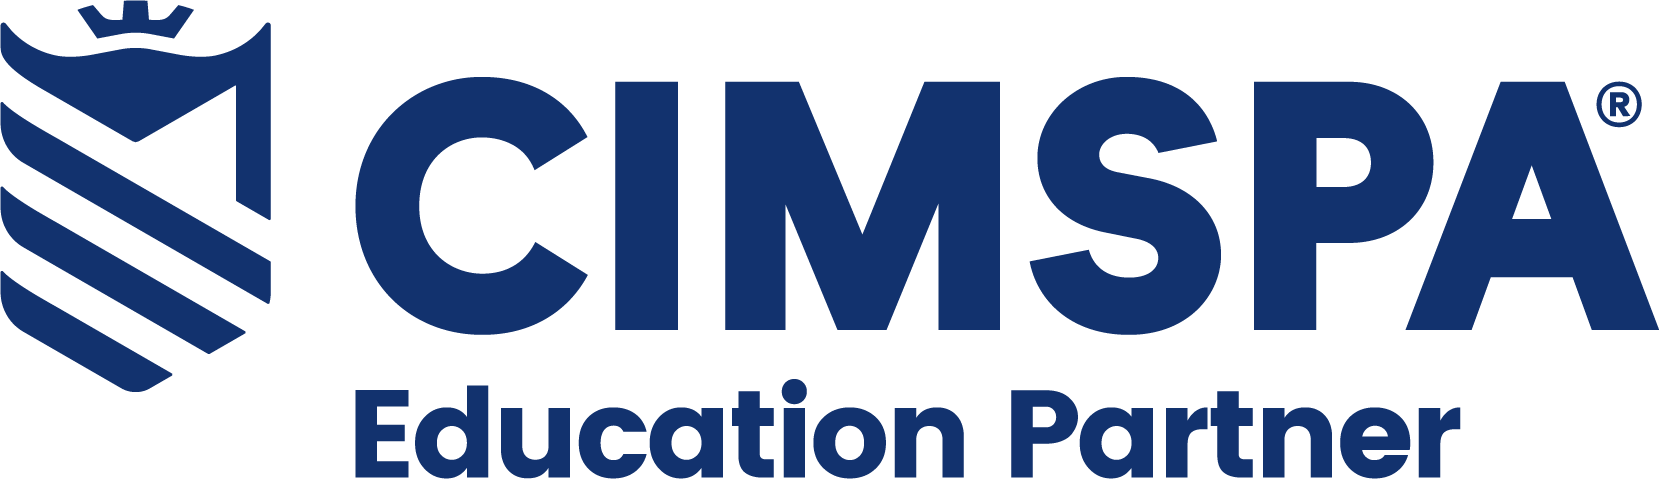 cimspa-registered-education-partner-navy